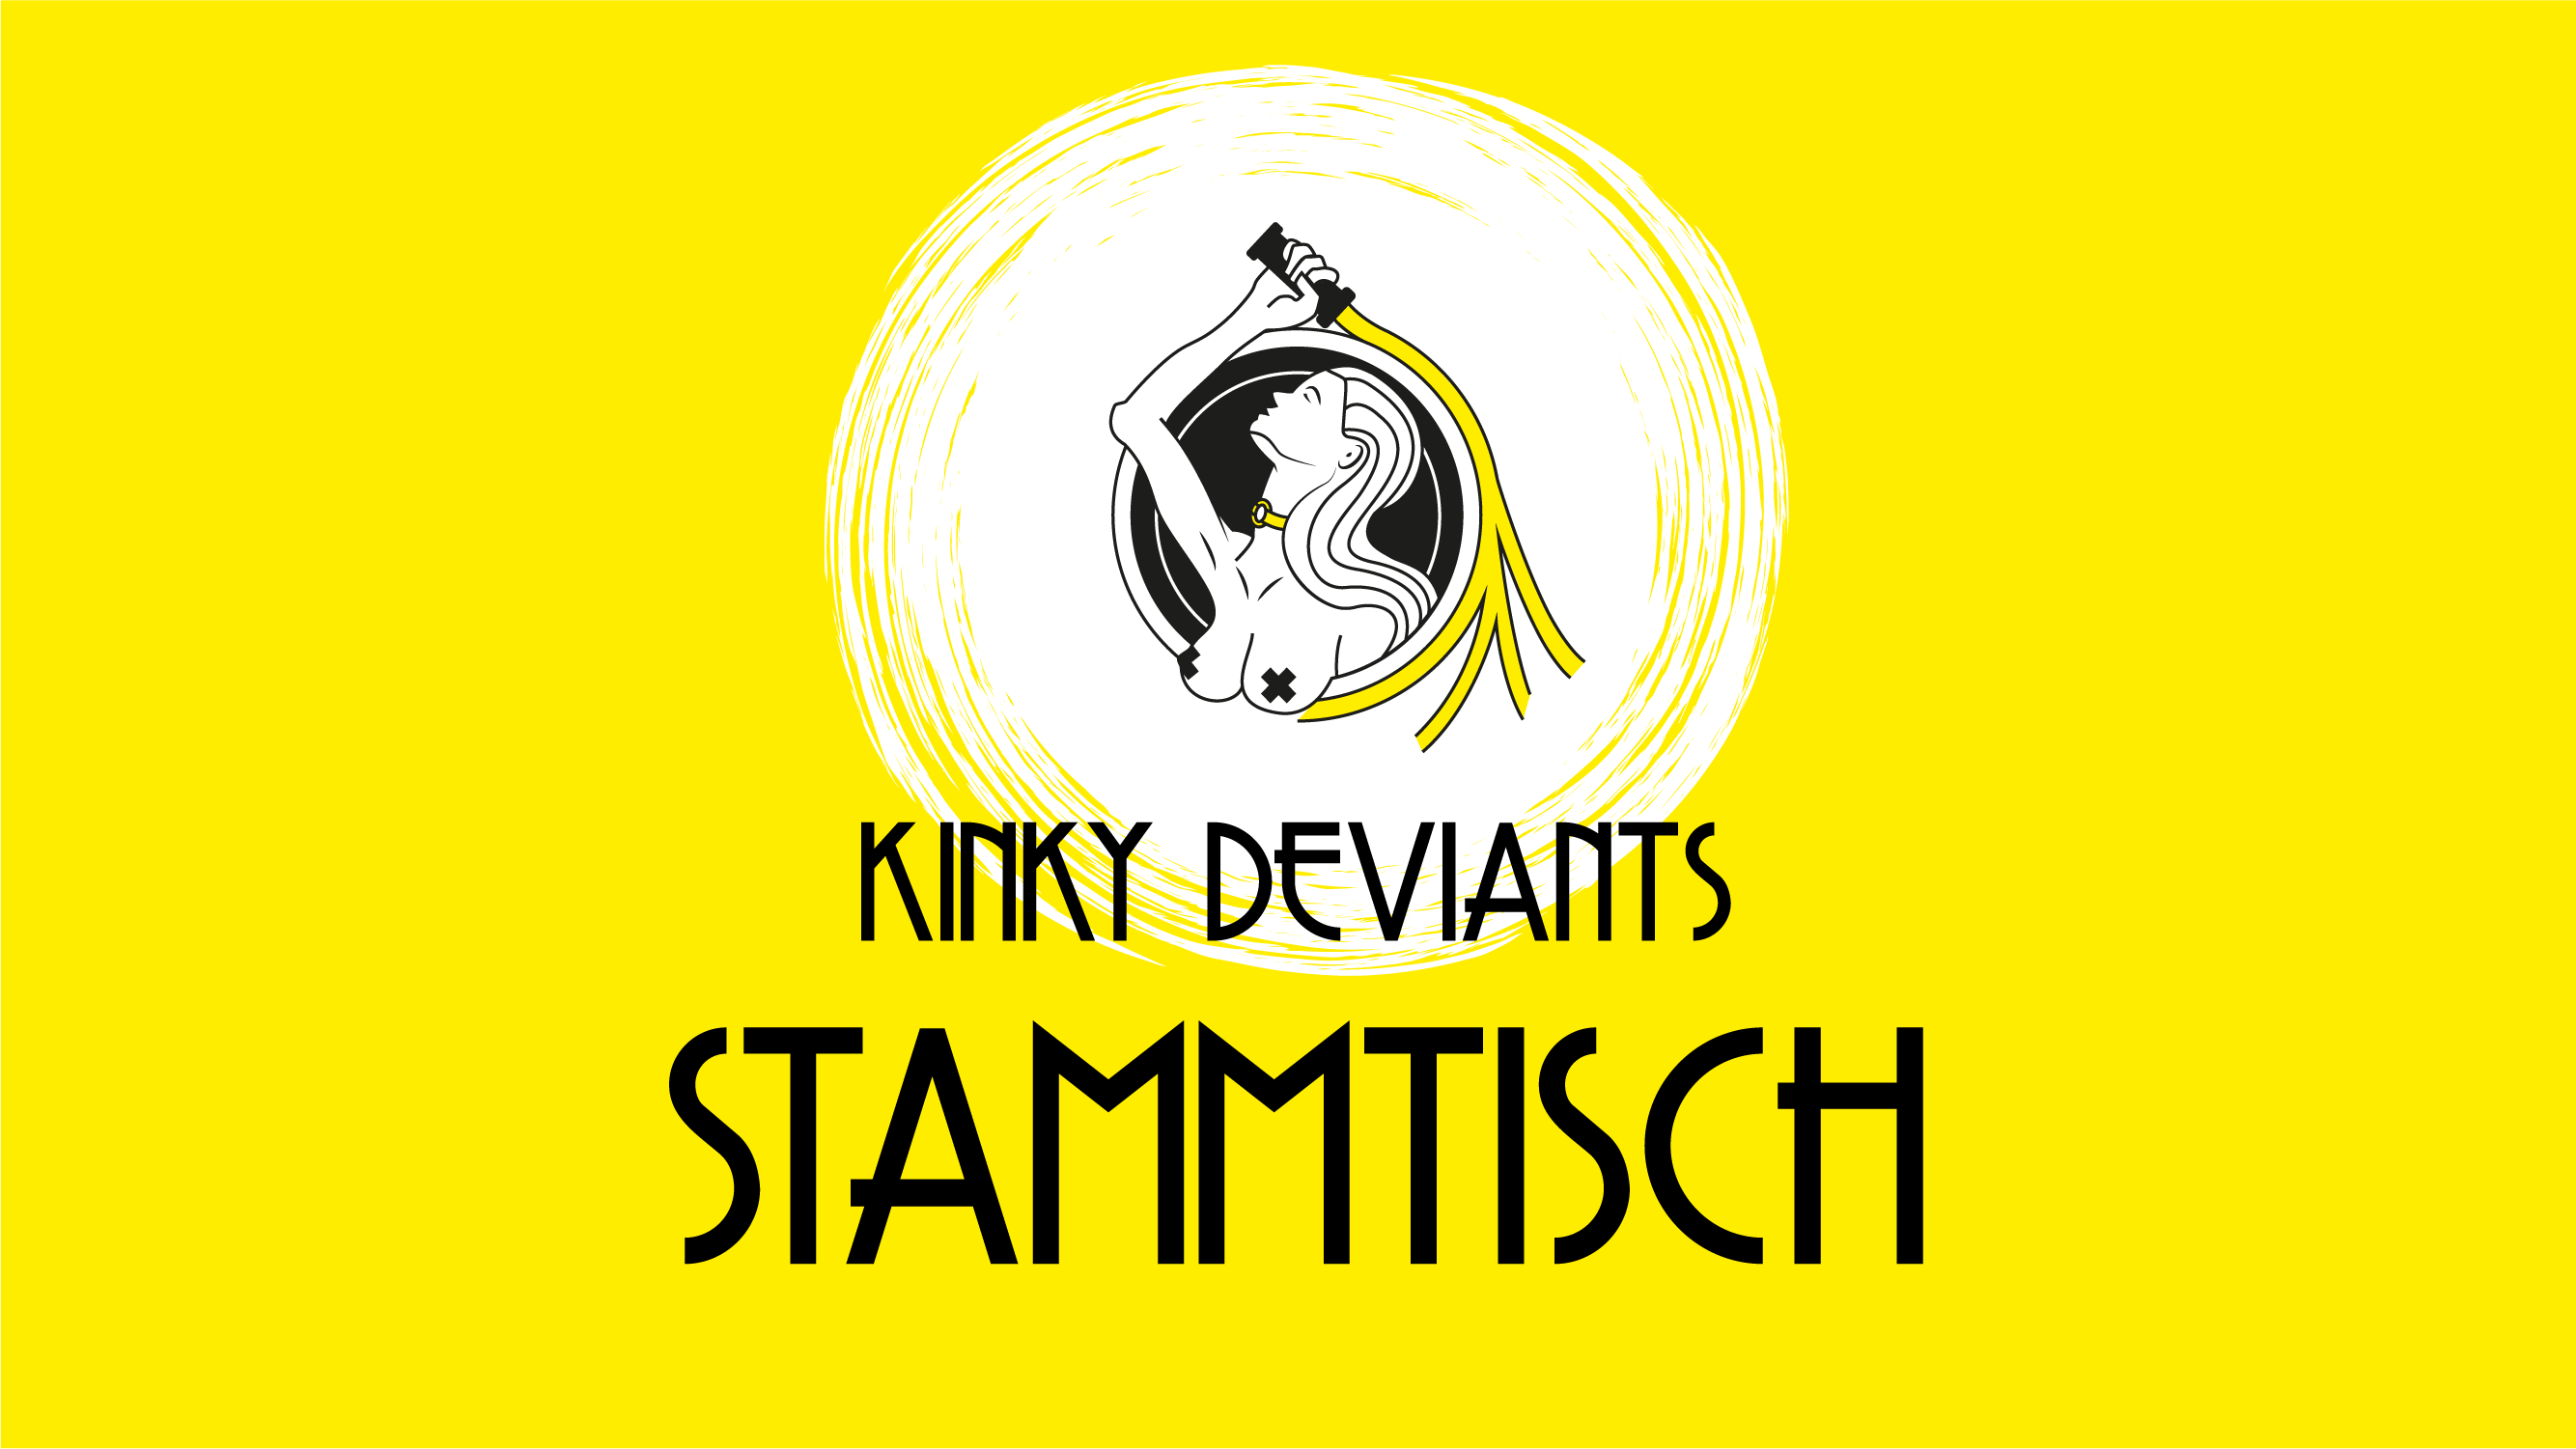 KD: Kinky Deviants Stammtisch November